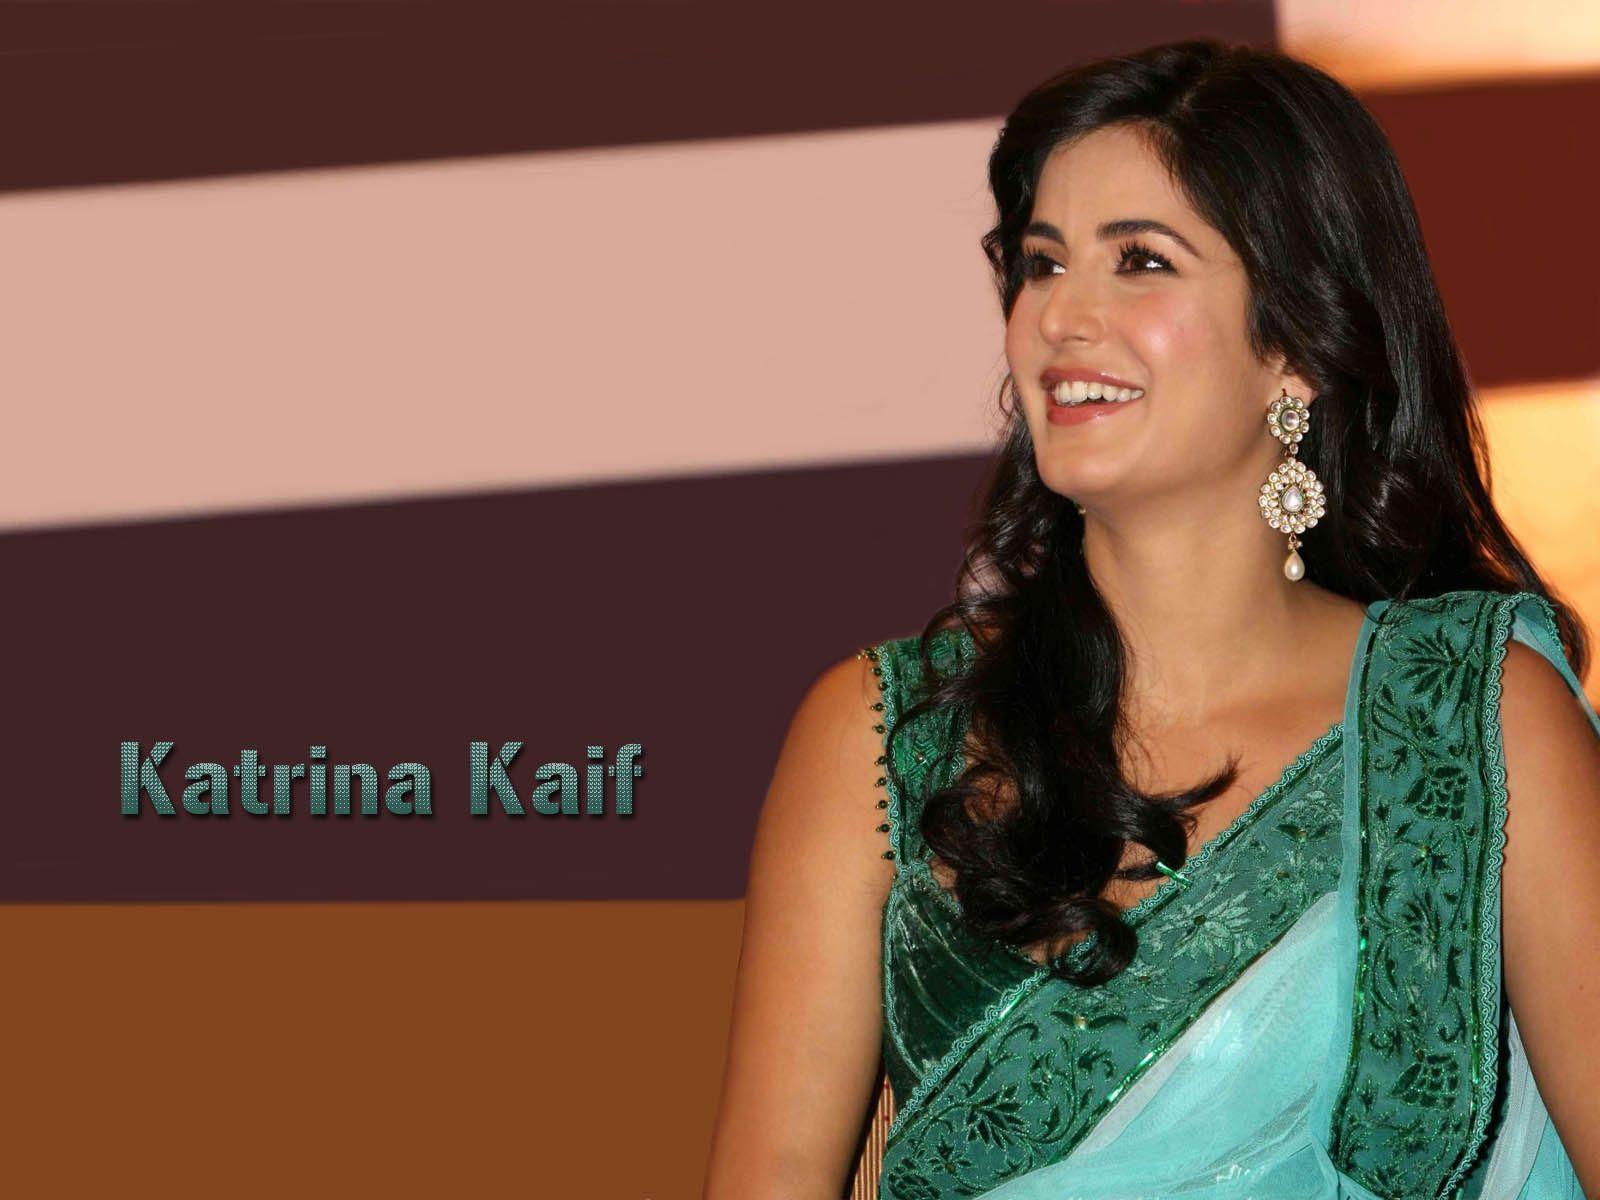 Katrina Kaif 2 Wallpaper and Background